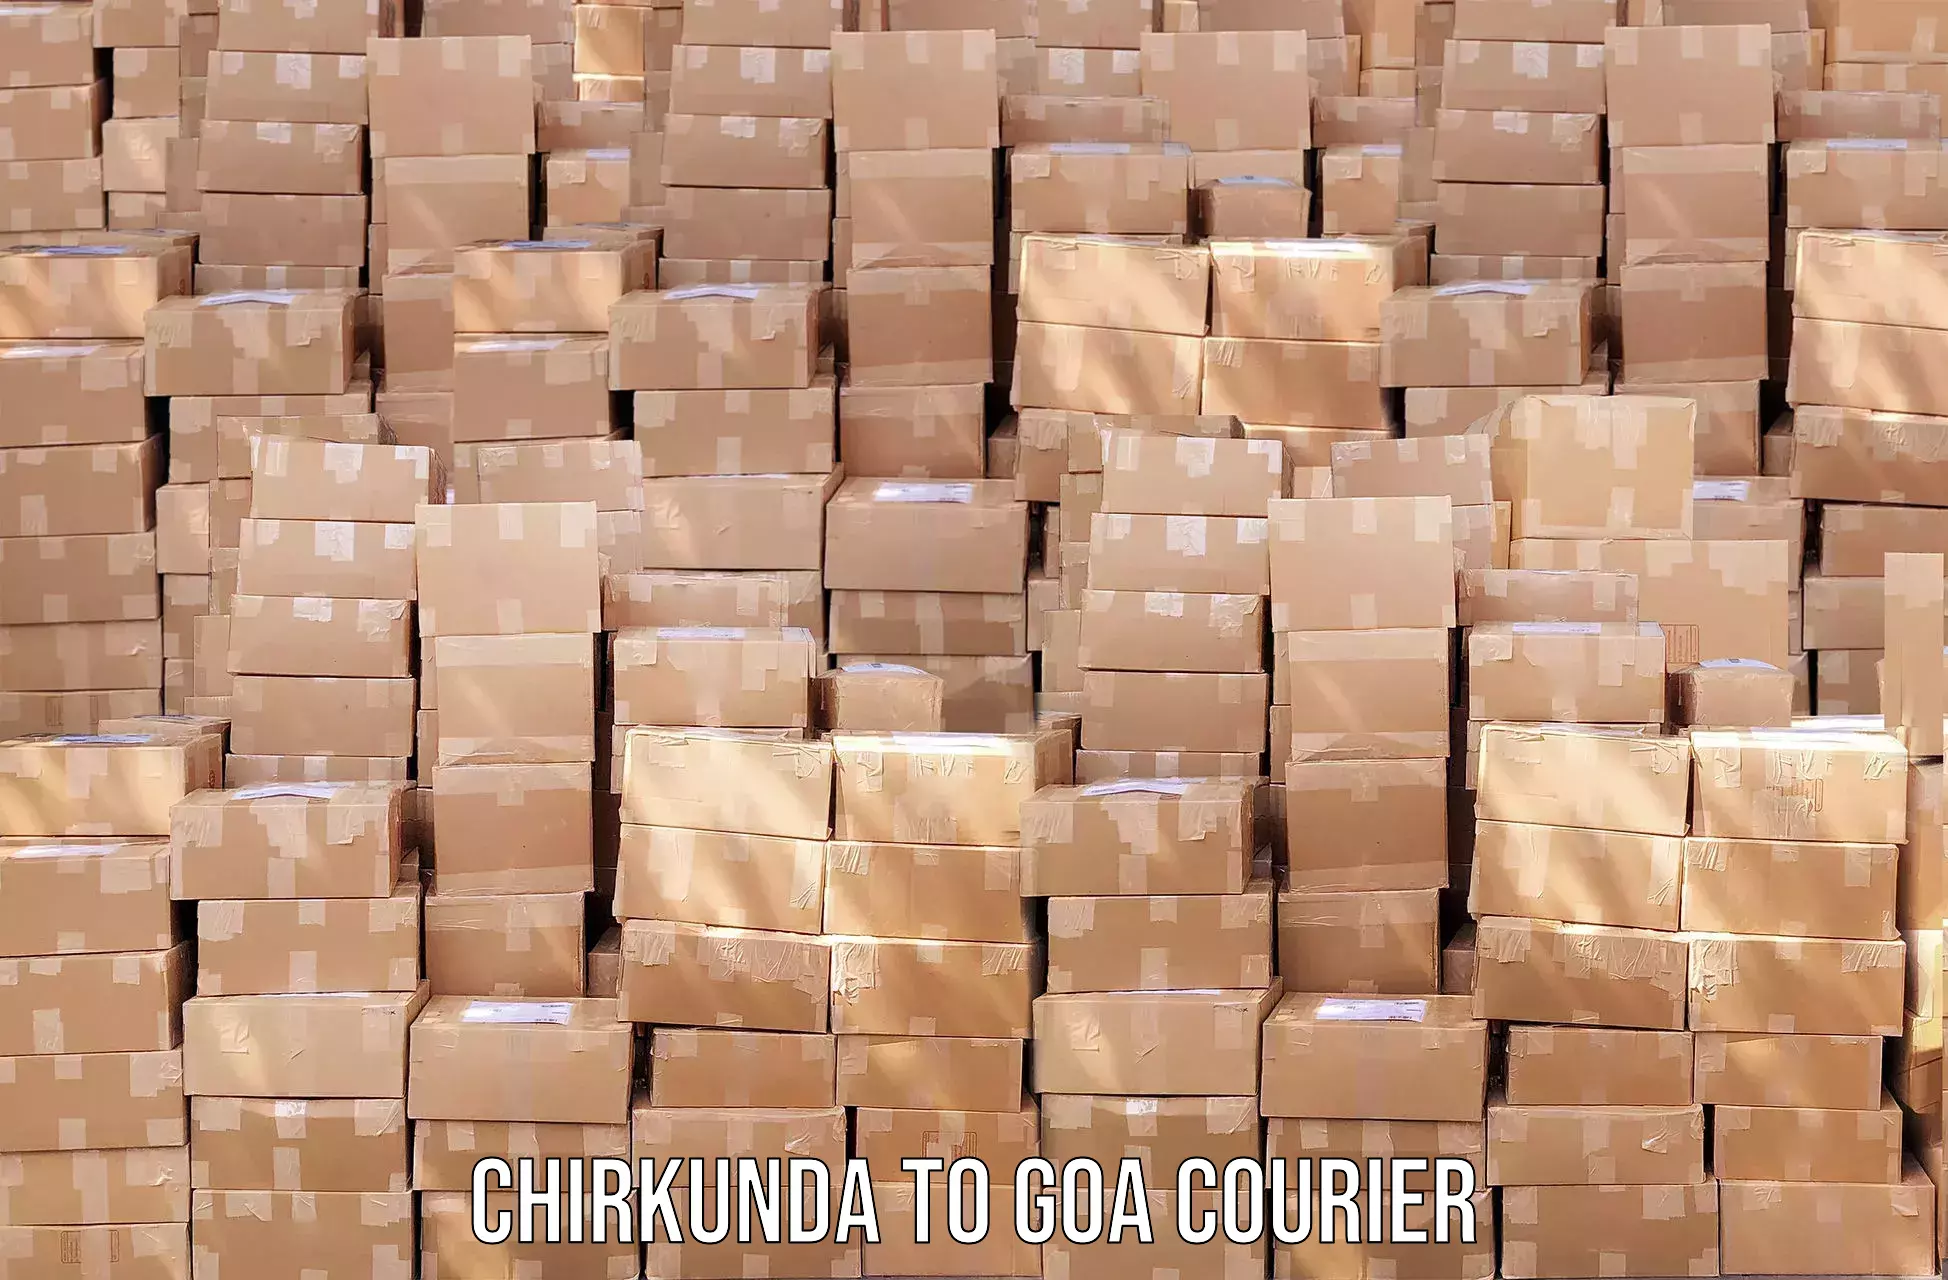 Professional courier handling Chirkunda to Goa